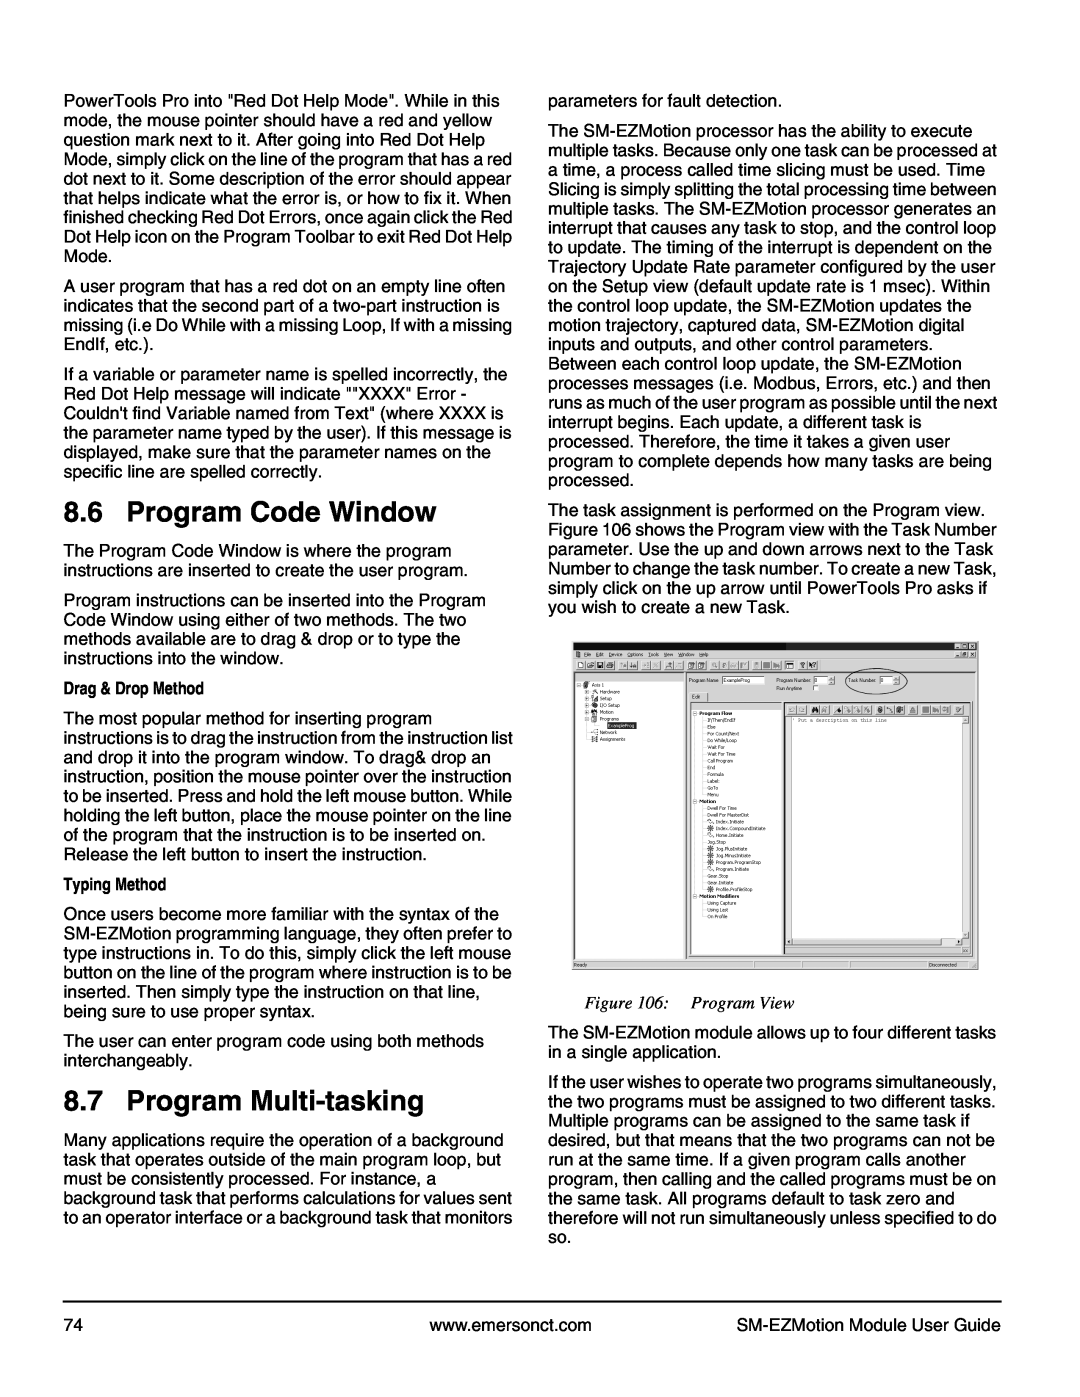 Emerson P/N 400361-00 manual Program Code Window, Program Multi-tasking, Program View, Drag & Drop Method, Typing Method 